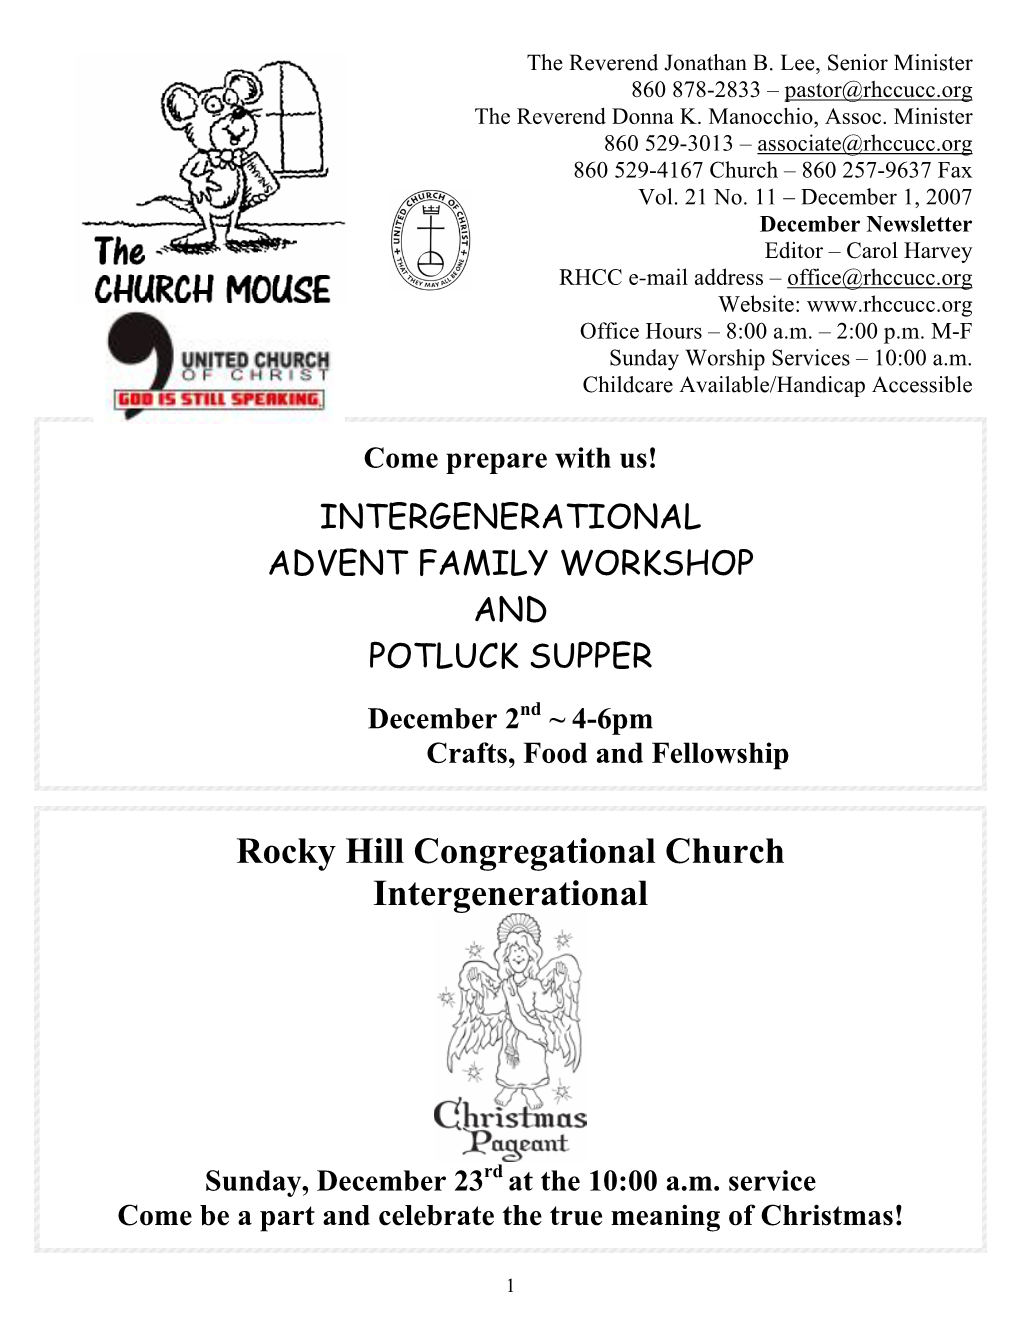 Rocky Hill Congregational Church Intergenerational